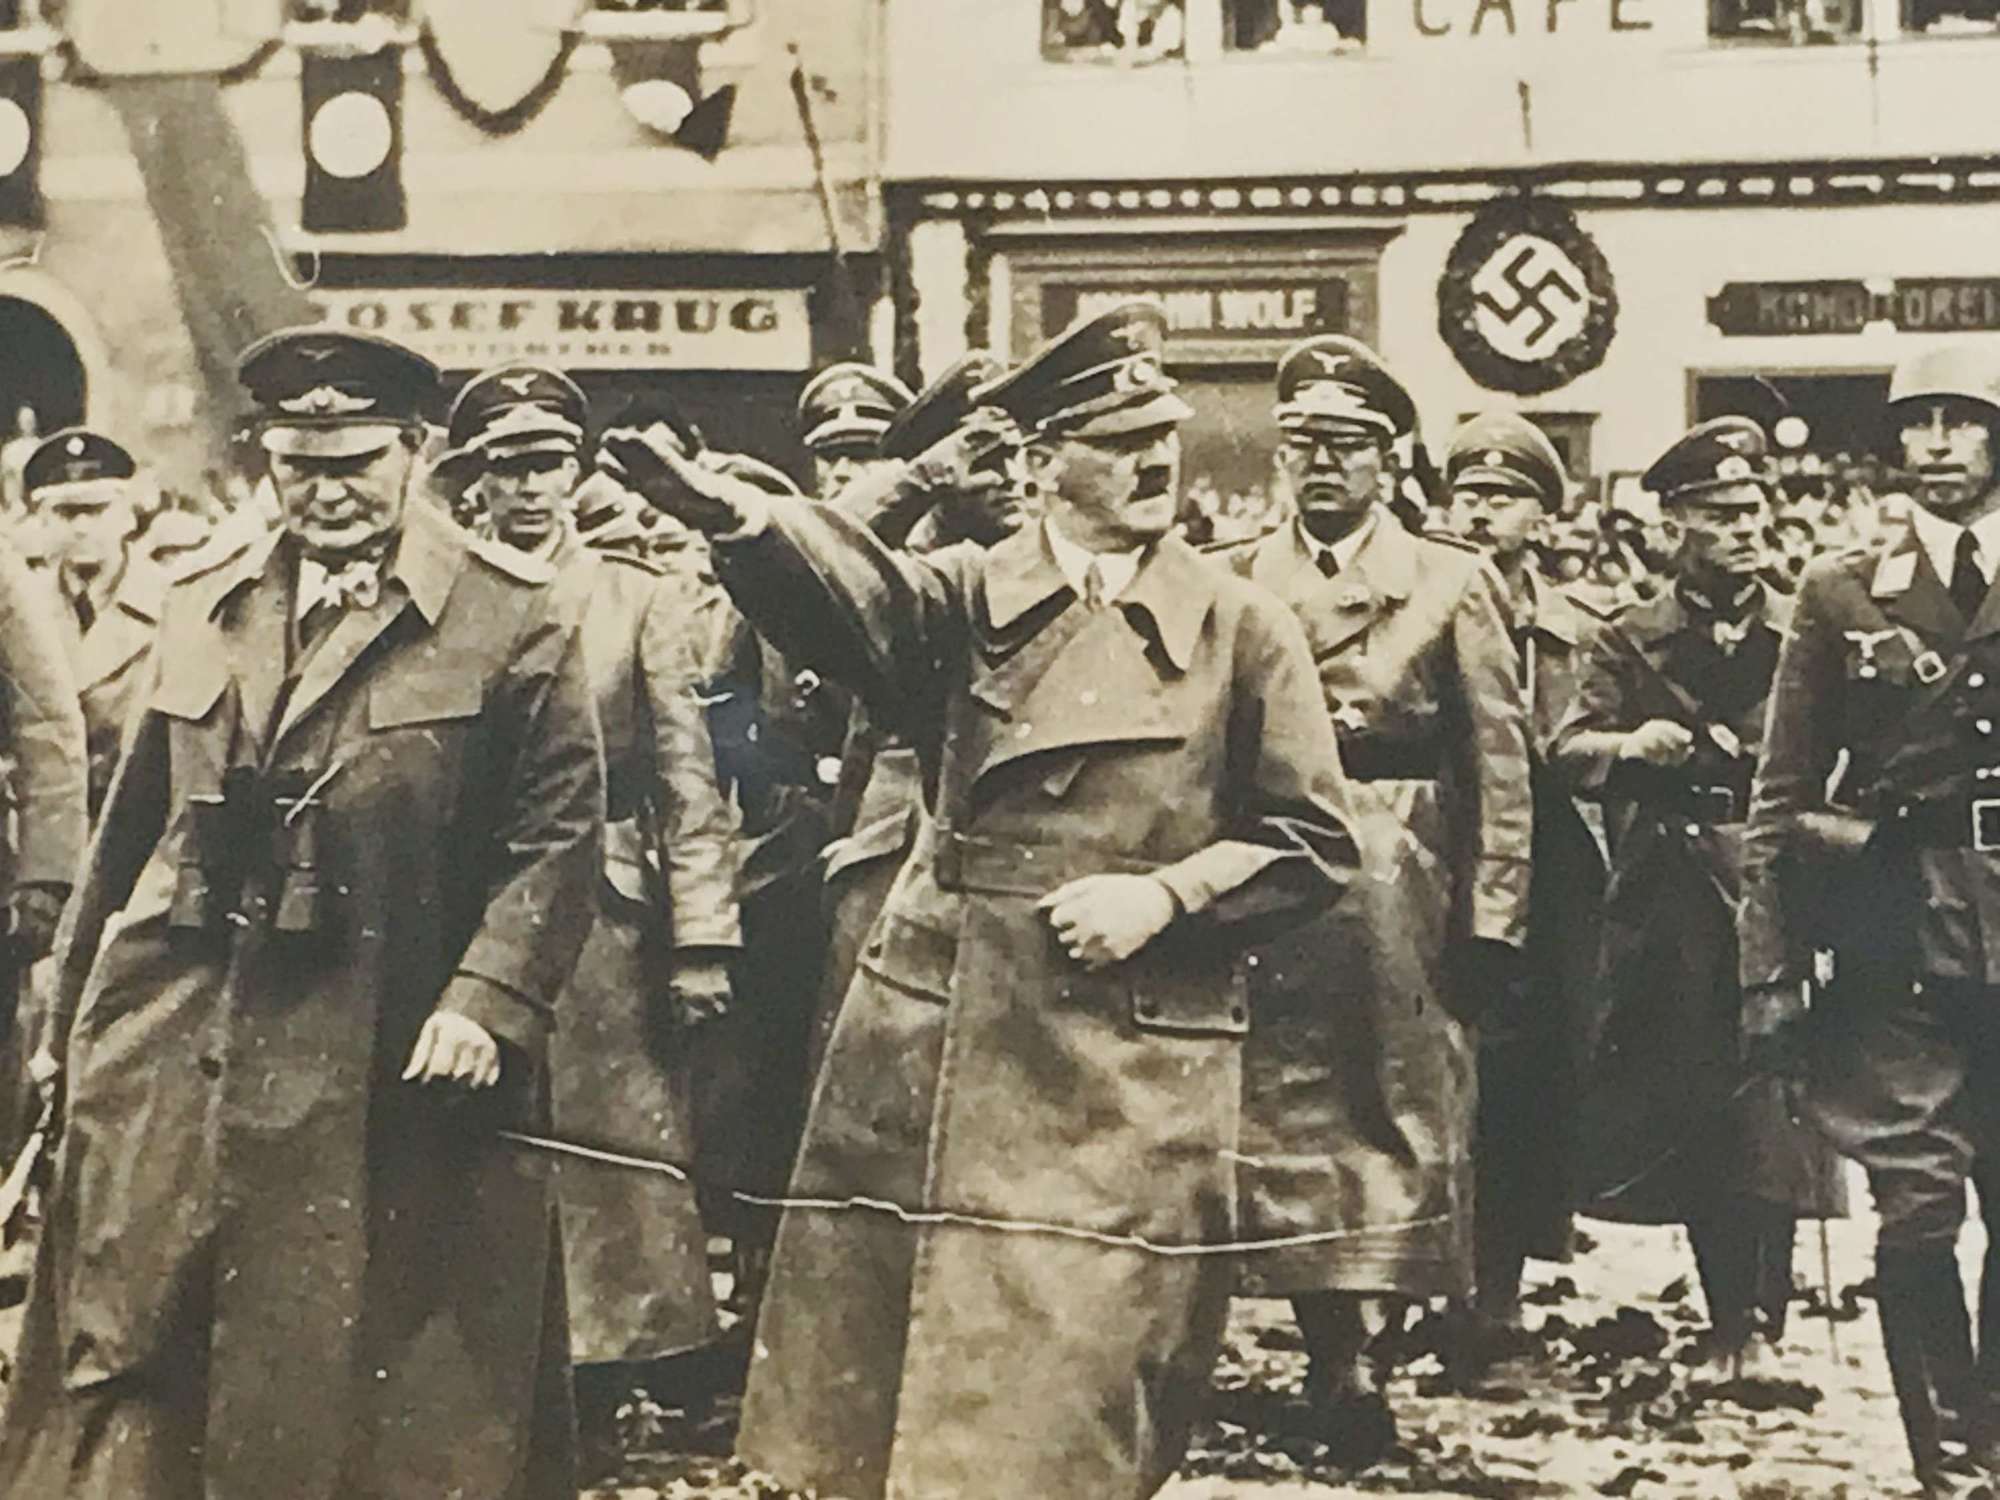 Press photo of Adolf Hitler and Hermann Goering